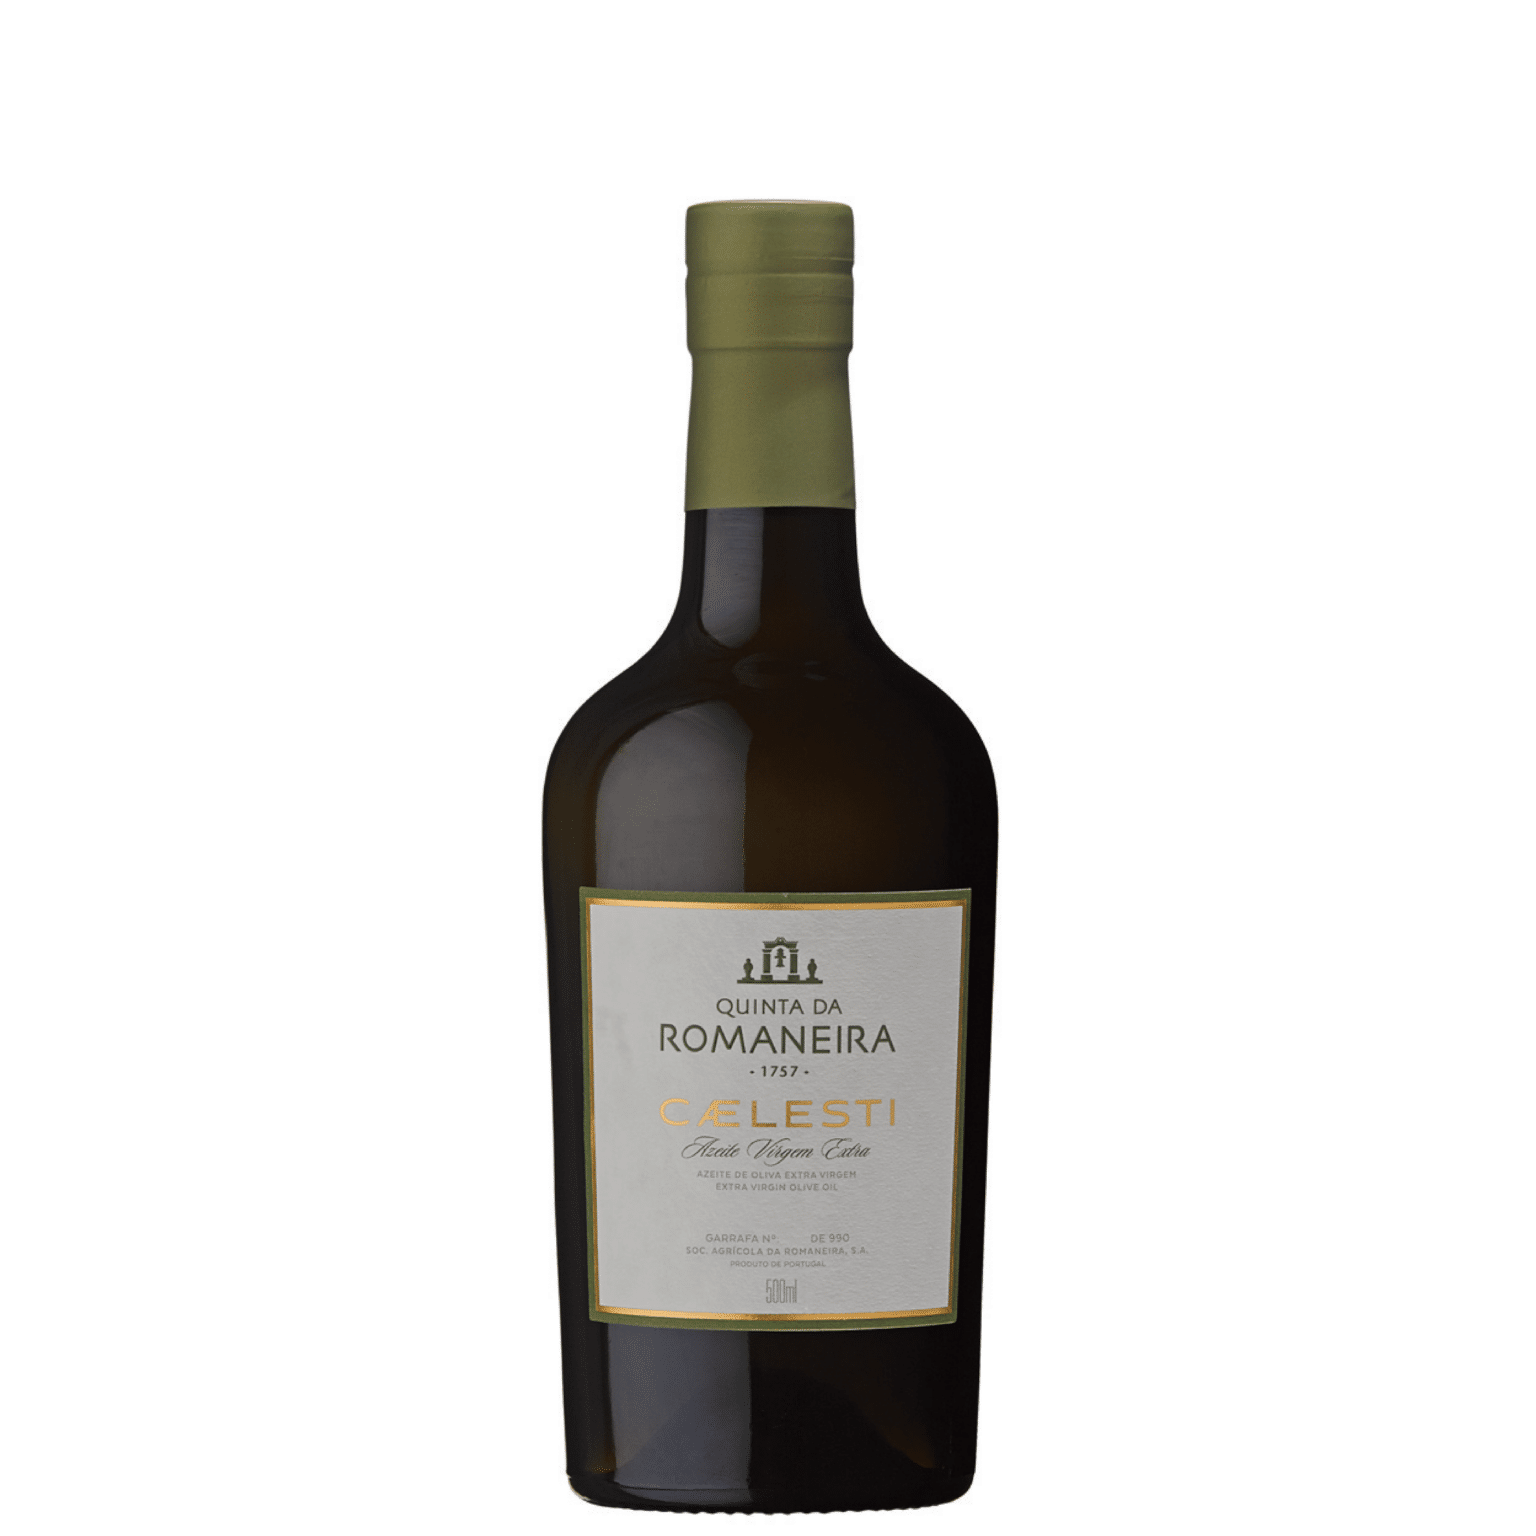 Quinta da Romaneira Caelesti Extra Virgin Olive Oil